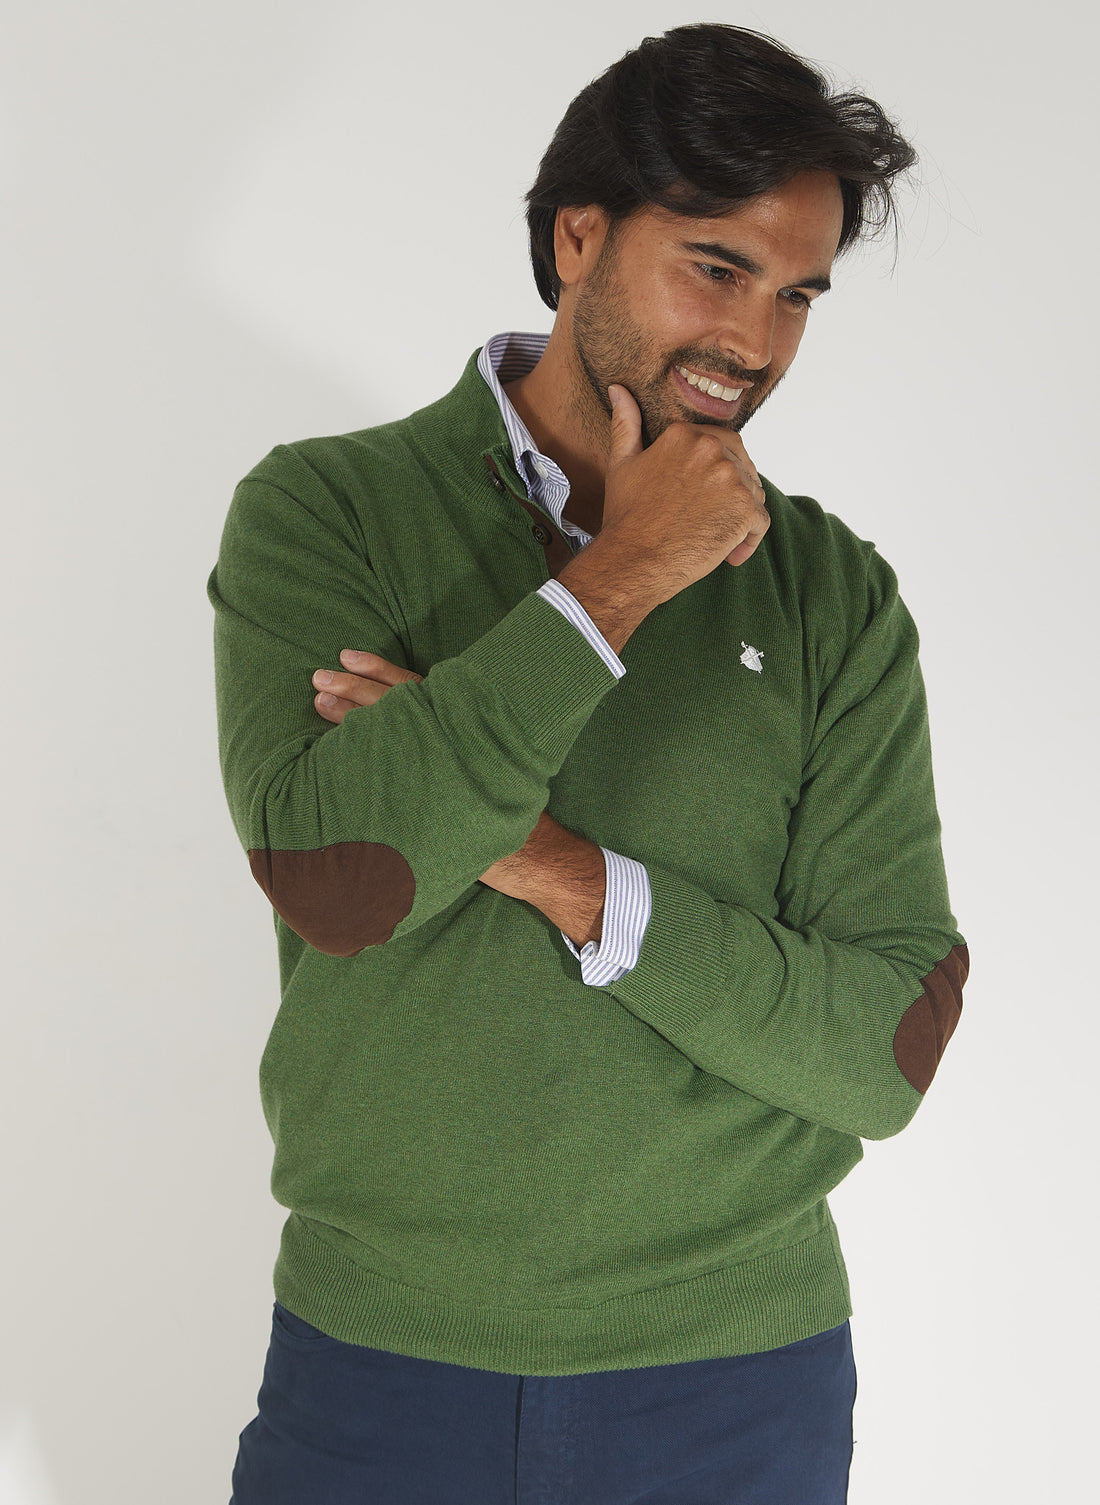 Groene herensweater met 4 knopen en elleboogbeschermers